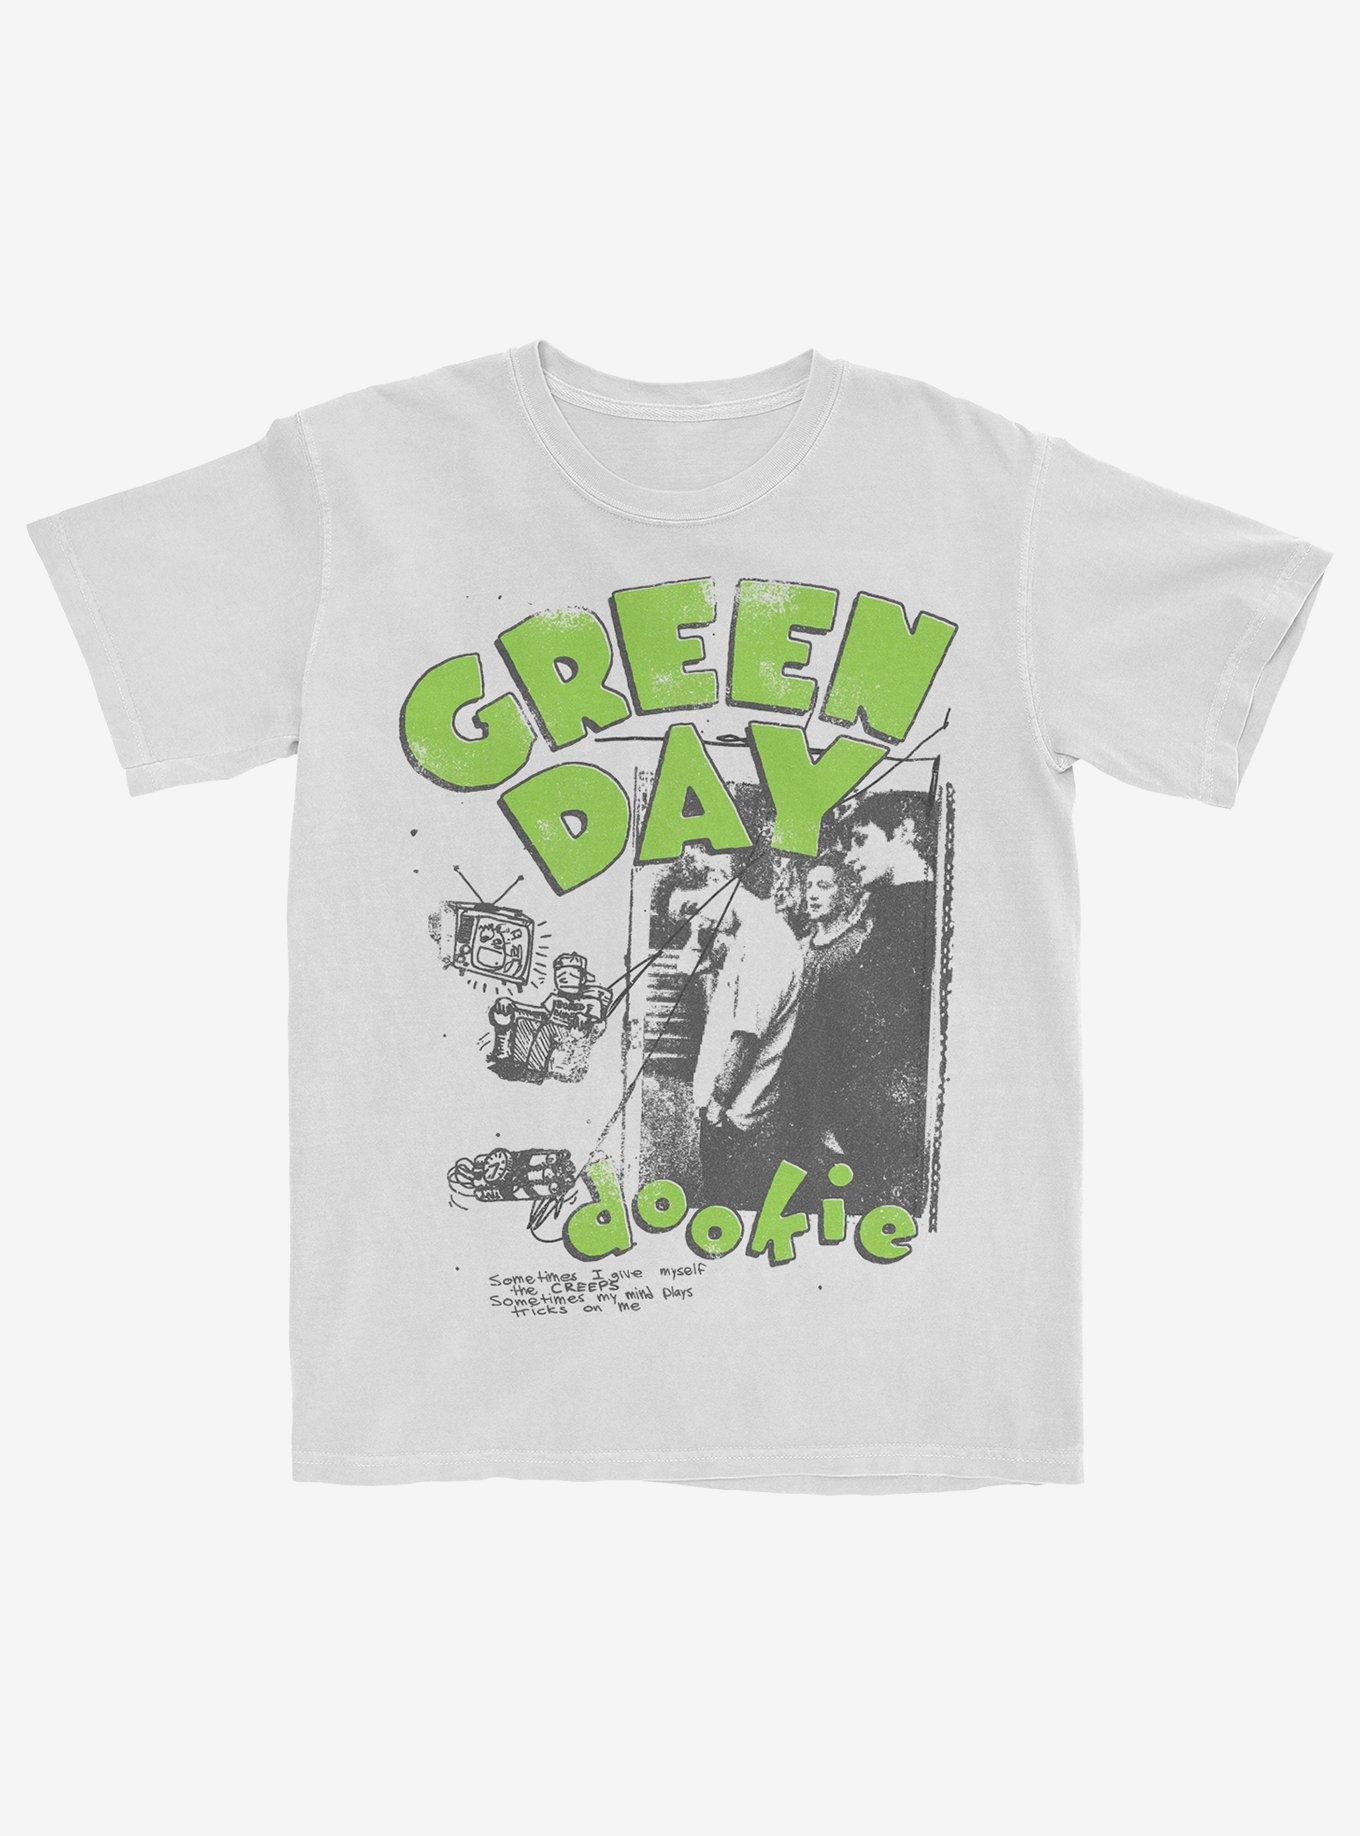 Green Day Dookie Photo Portrait T-Shirt